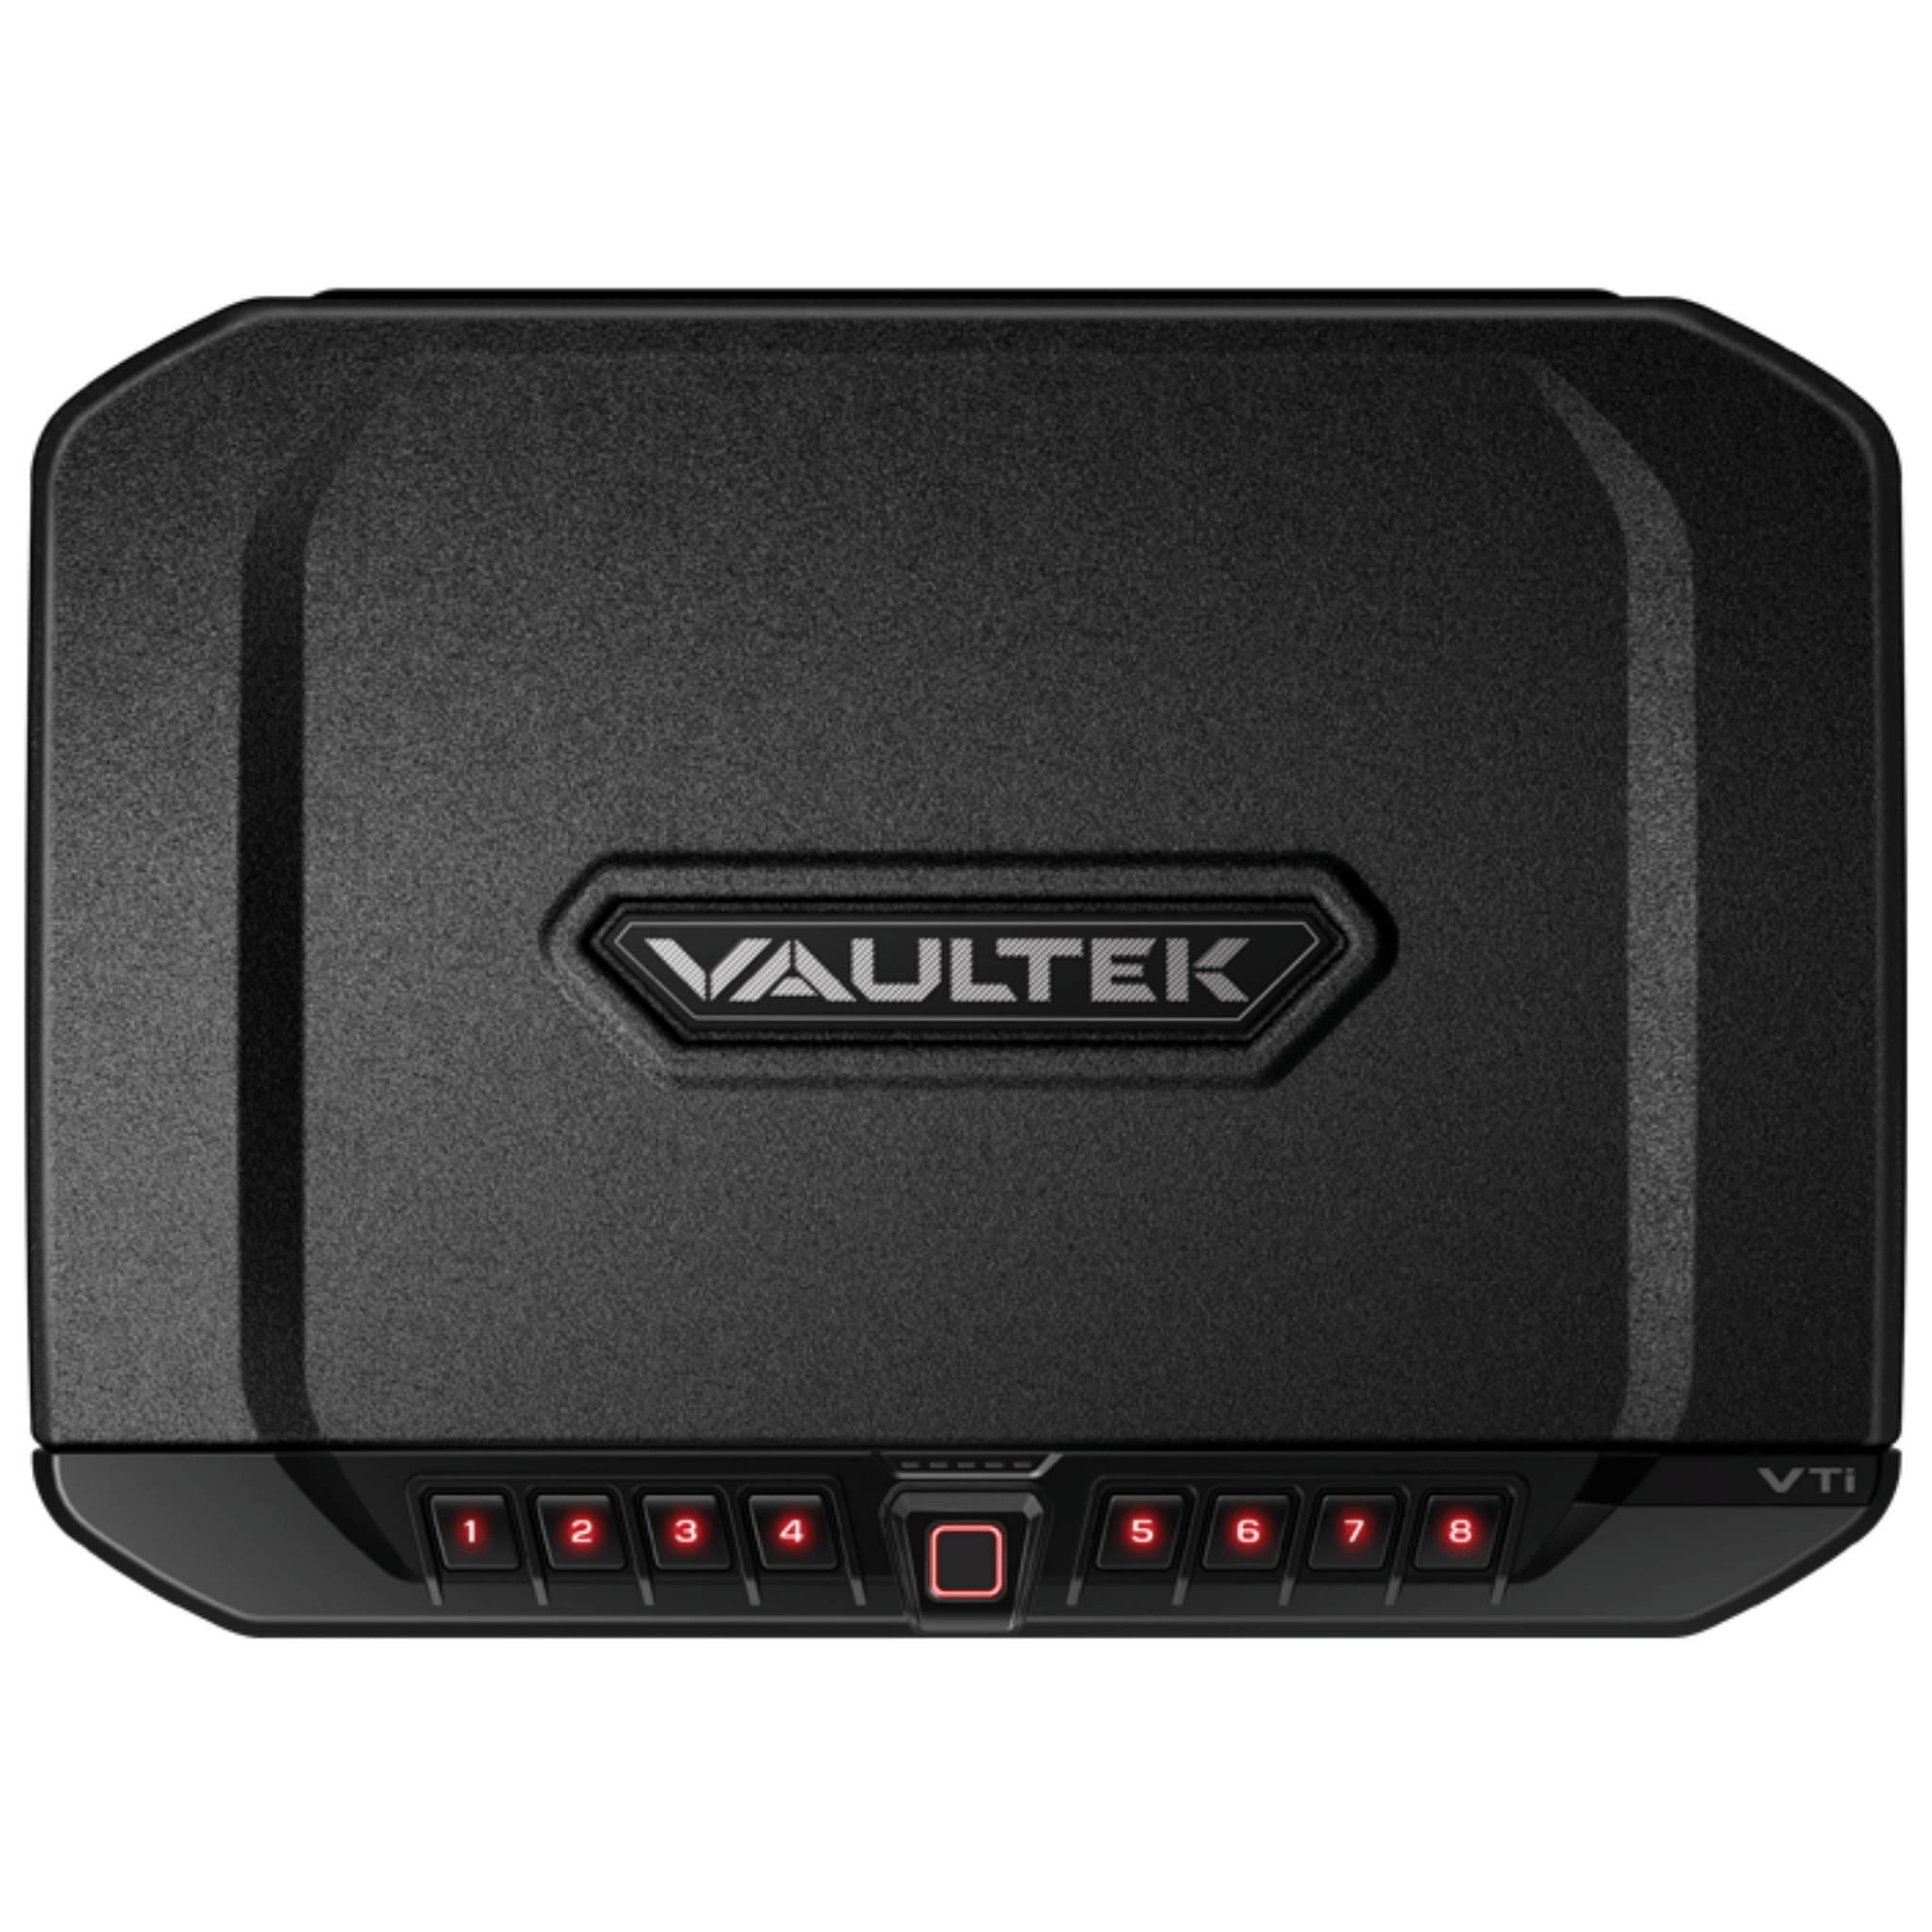 Vaultek Pro VTi - Bluetooth - Biometric